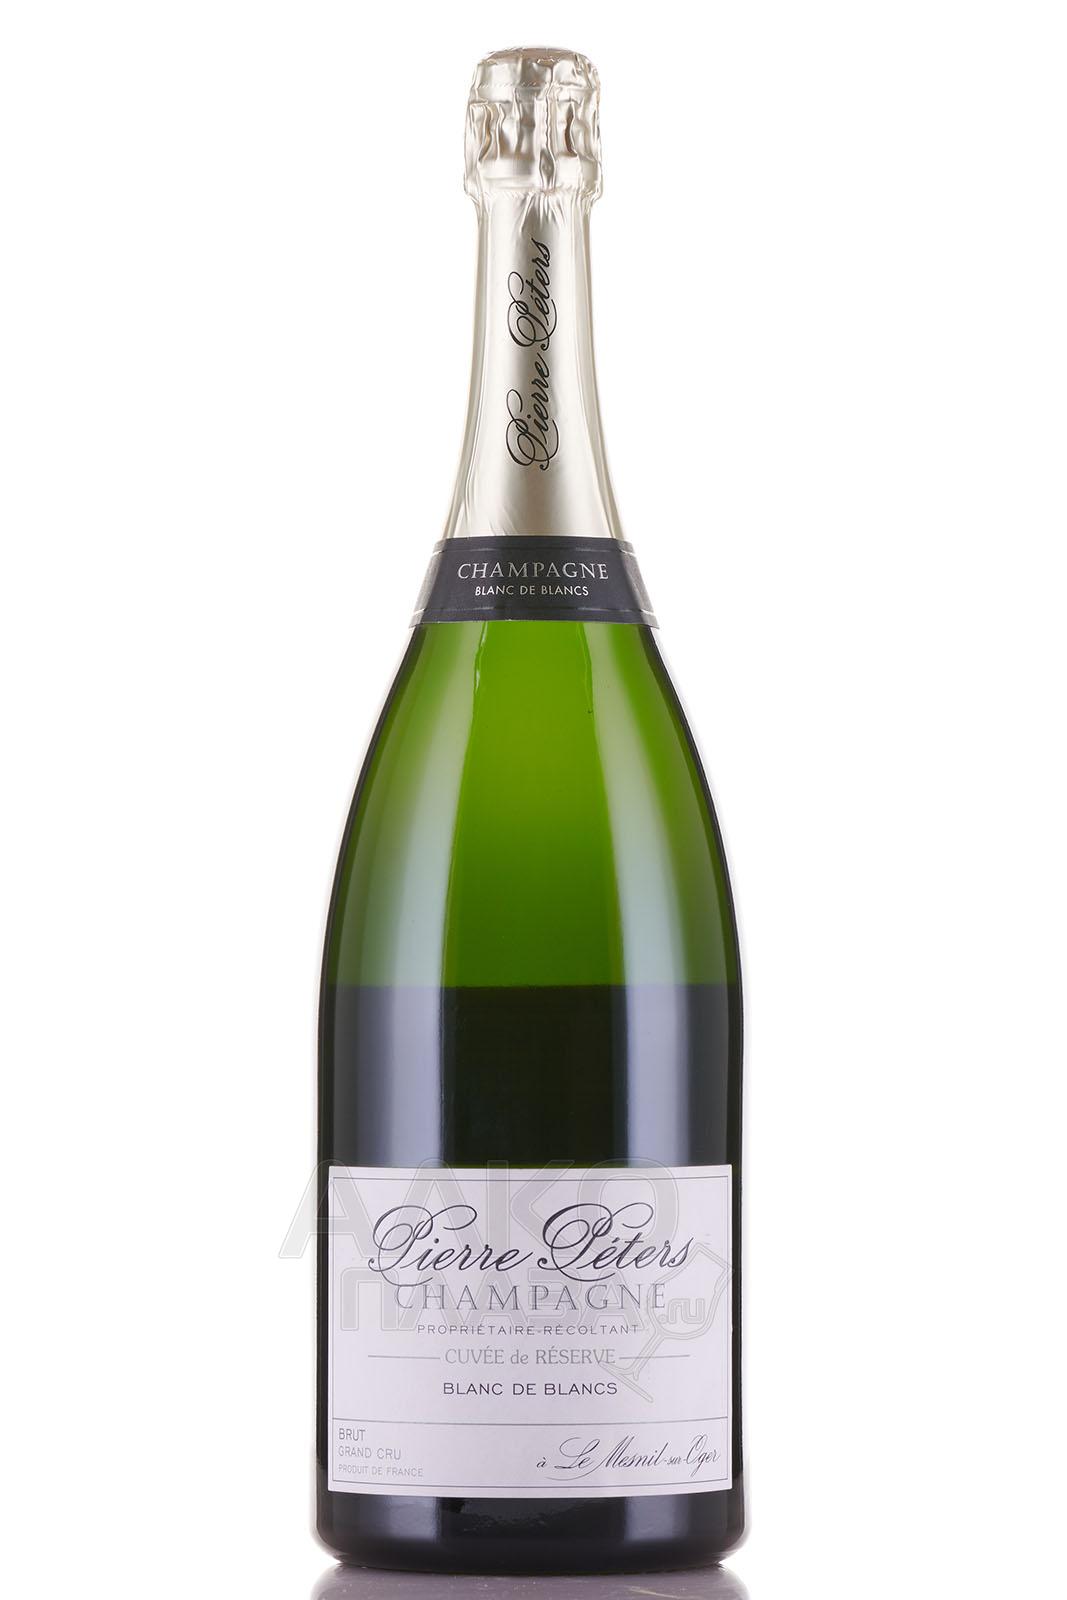 Pierre Peters Cuvee de Reserve Blanc de Blancs Grand Cru Champagne AOC - шампанское Пьер Петерс Кюве де Резерв Блан де Блан Гран Крю 1.5 л